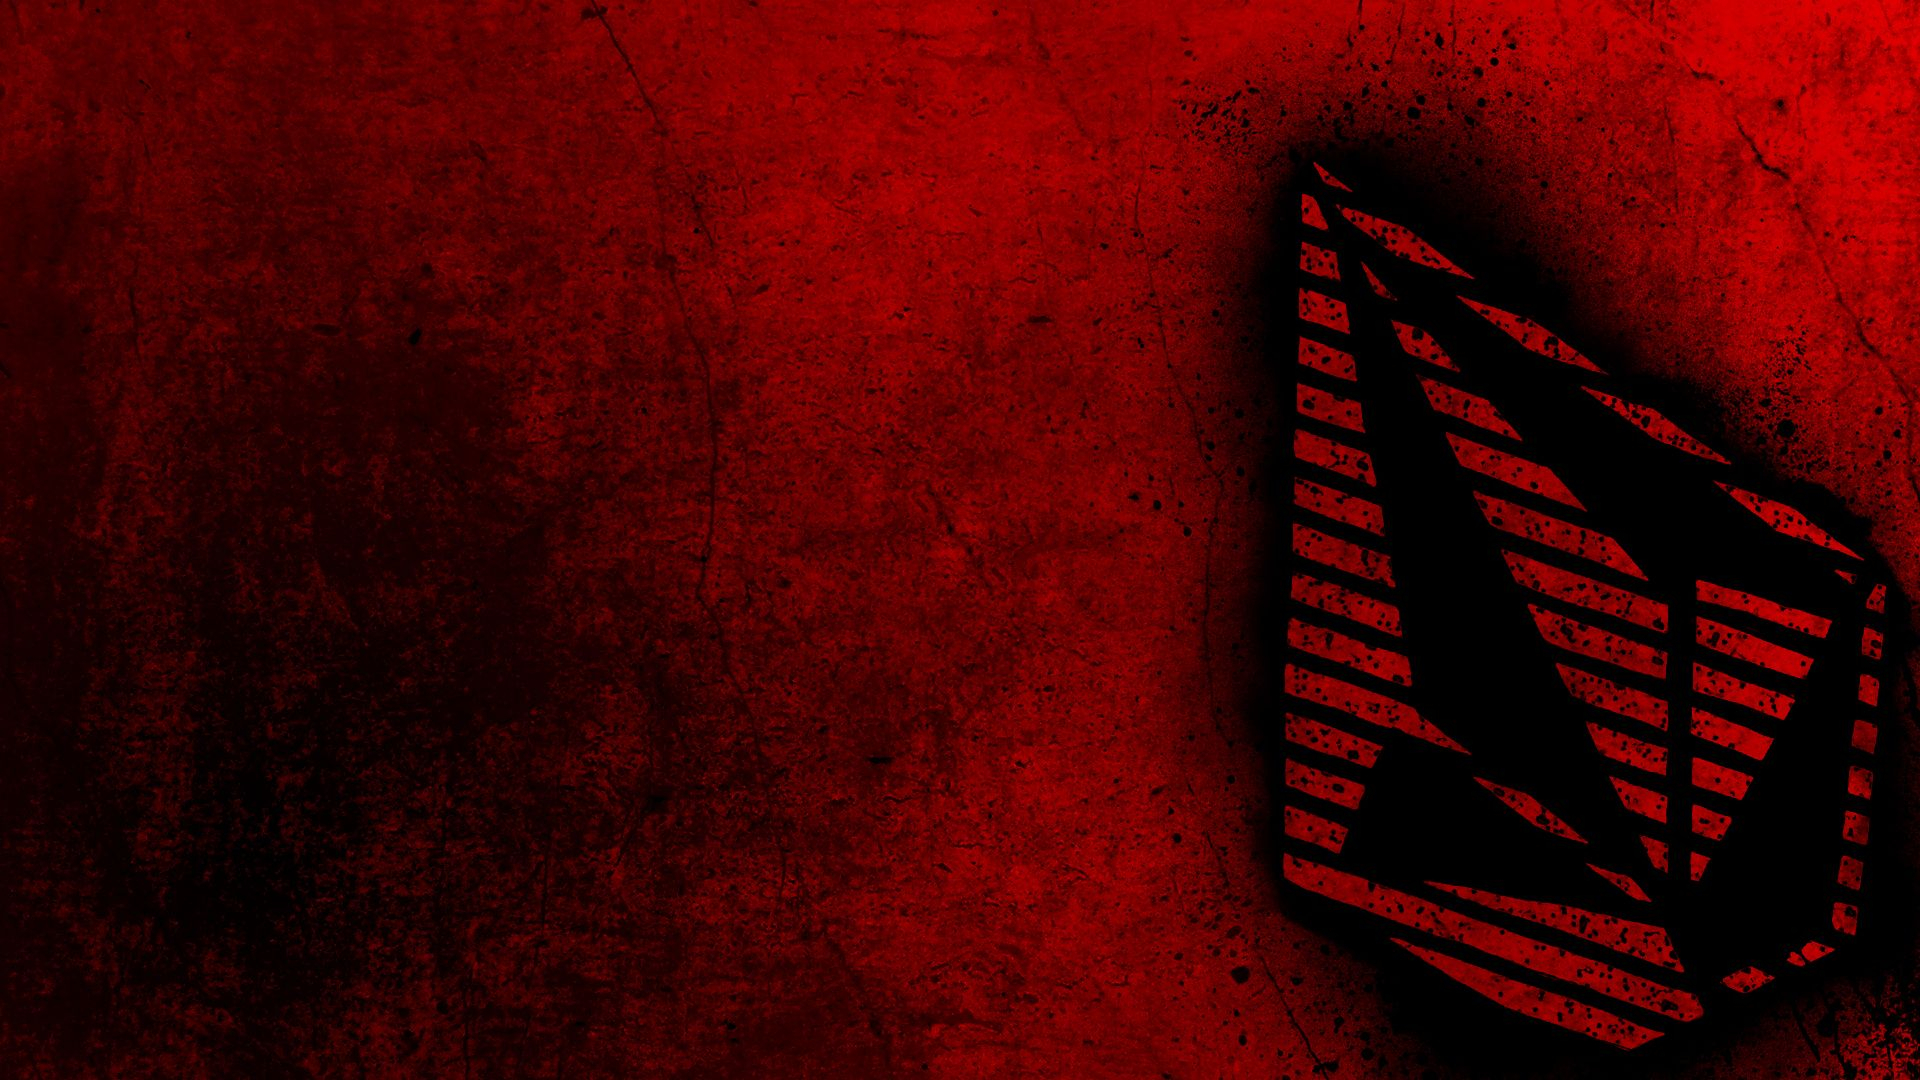 1920x1080 Red Volcom Graffiti Original Best HD Wallpaper Image Background Picturefadf | Samsung galaxy s8 wallpapers, Galaxy s8 wallpaper, Red wallpaper